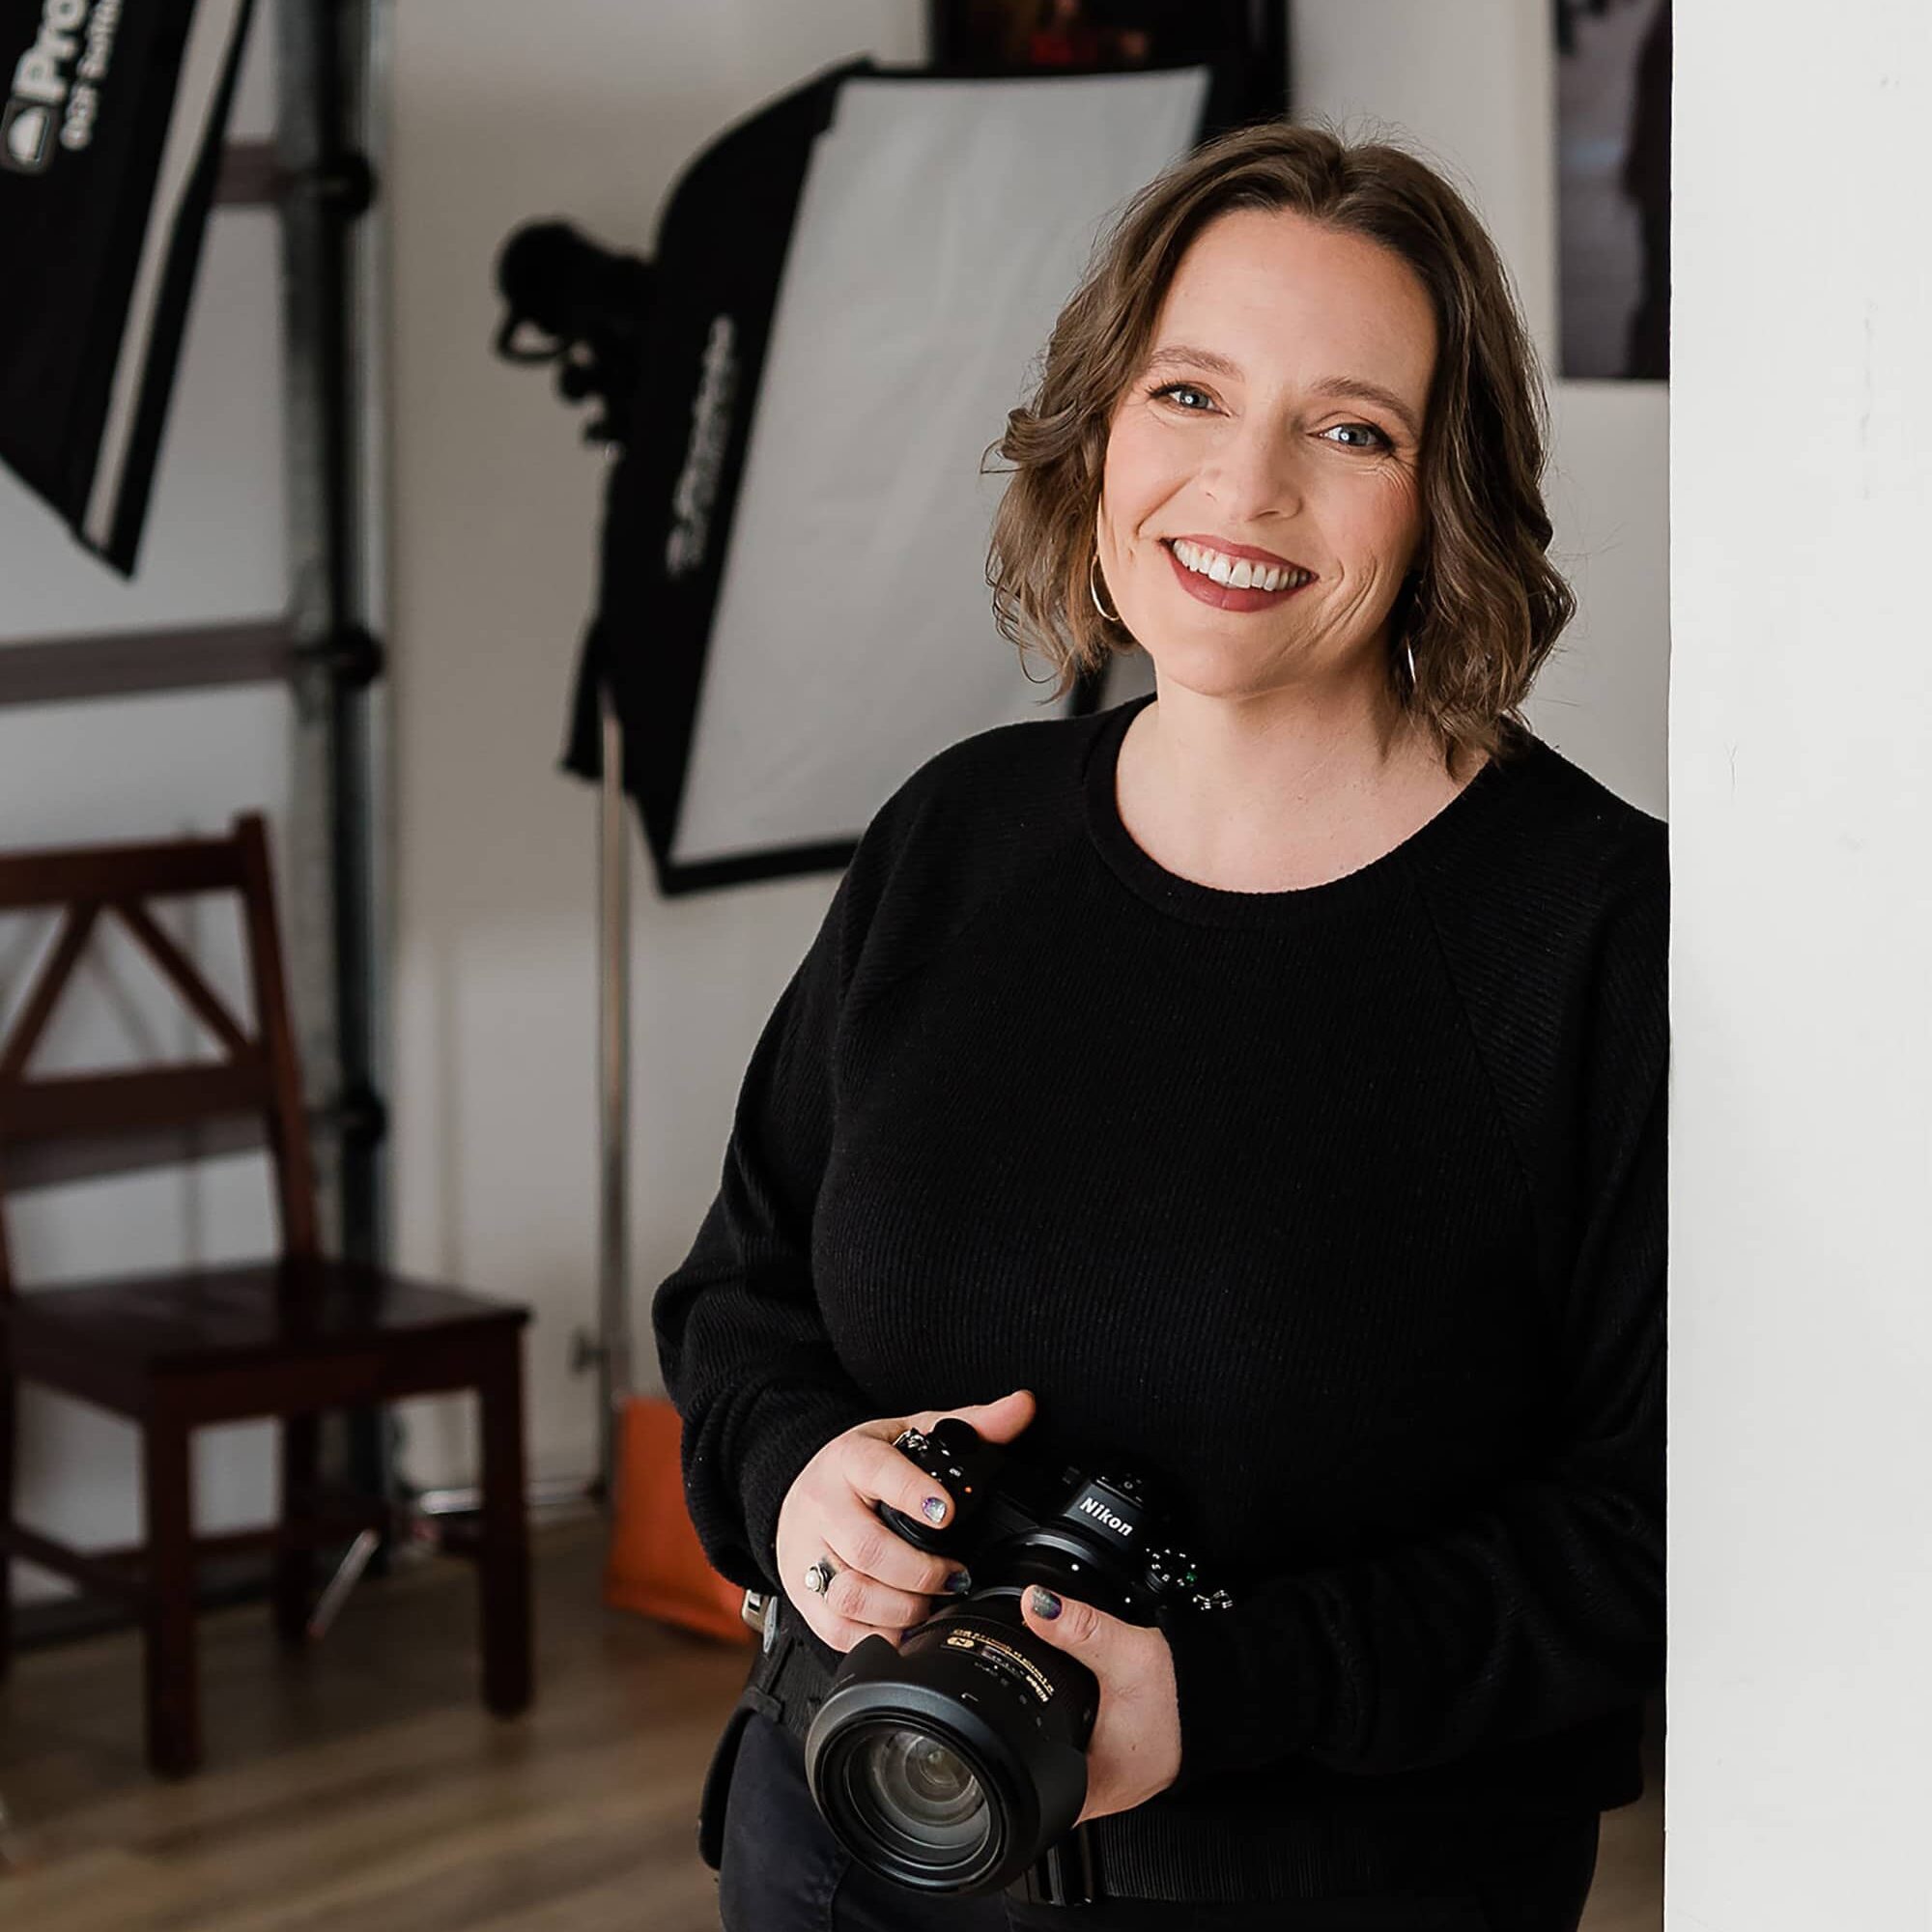 Lara Grauer holding camera in studio while smiling